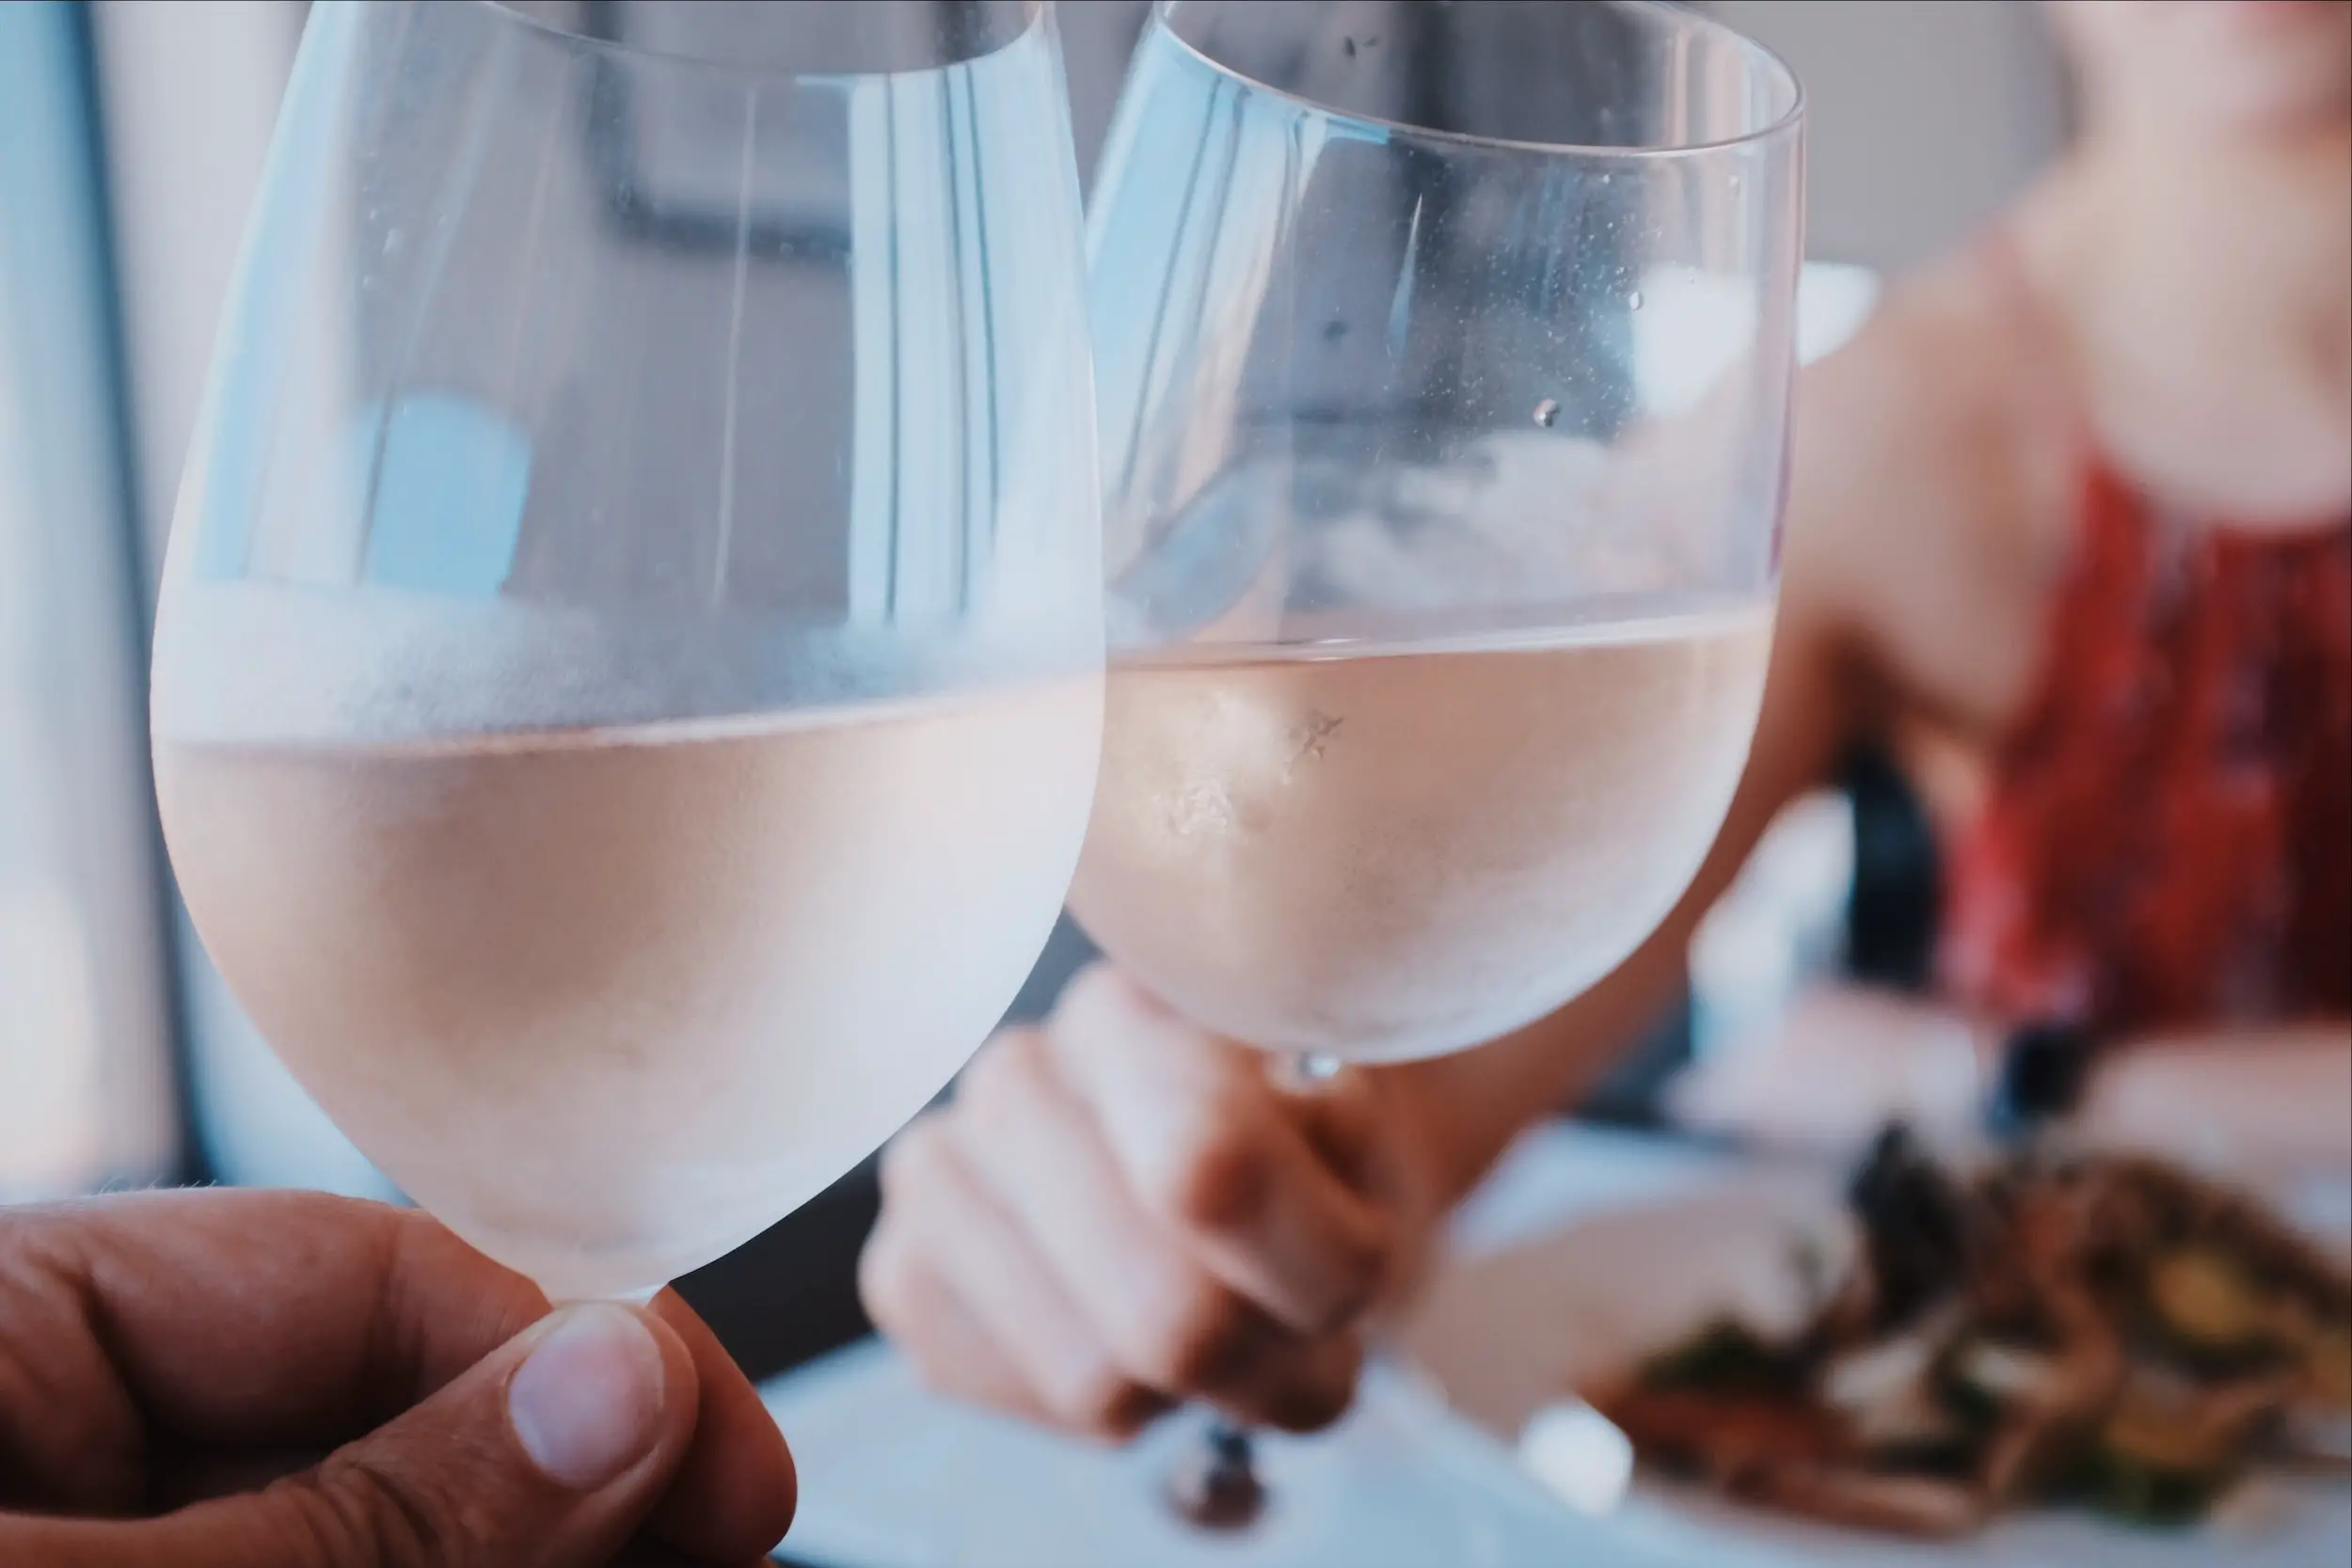 what wine tastes like strawberries - rose wine cheers